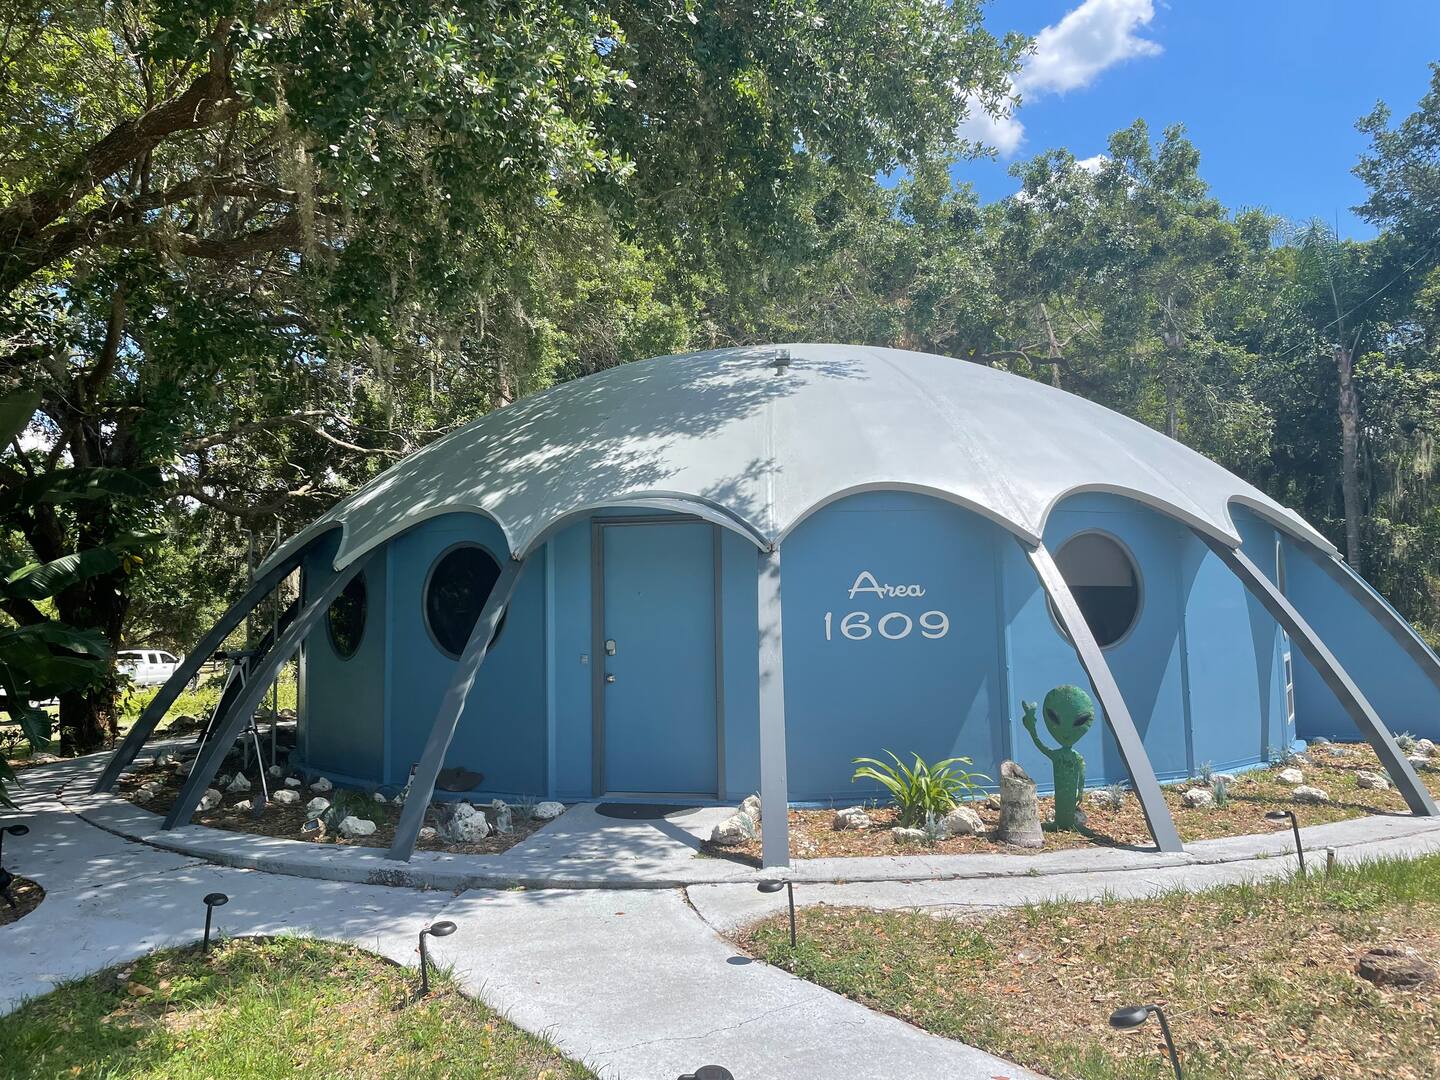 Alien dome airbnb